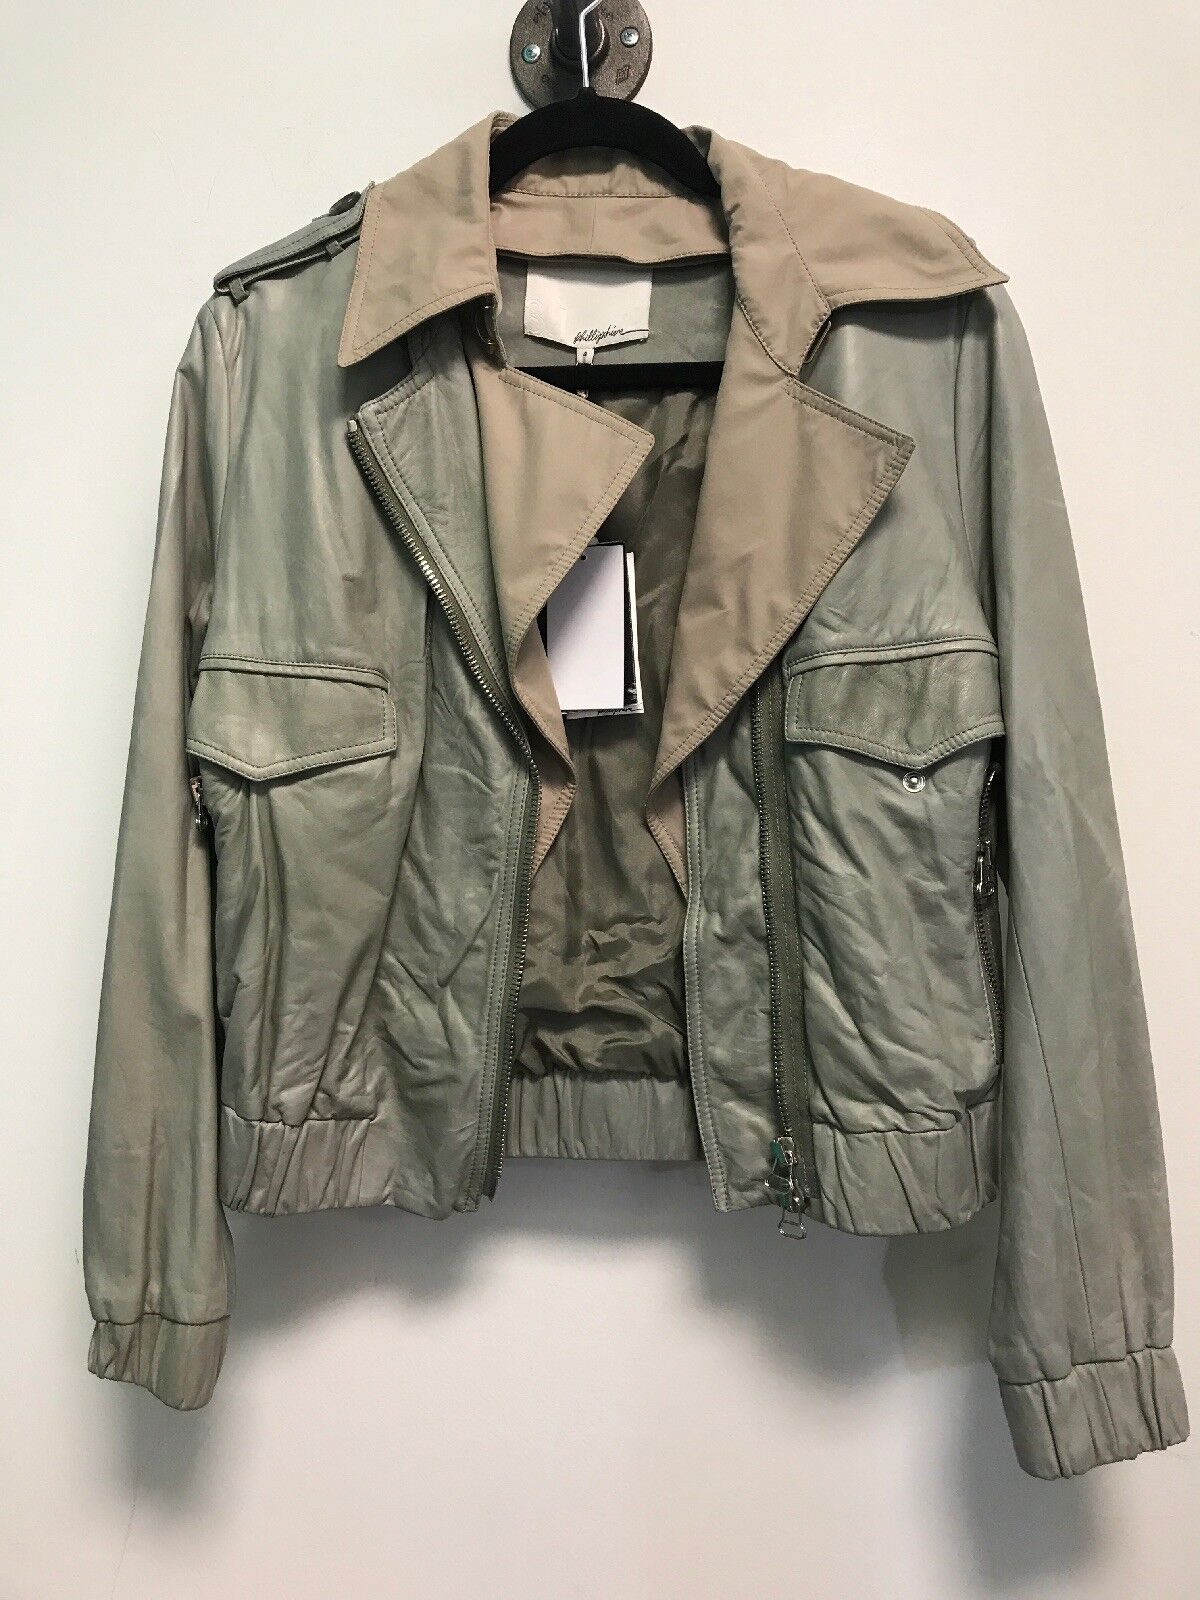 NEW Women's 3.1 Phillip Lim Spruce Leather Bomber Jacket Coat Size 4